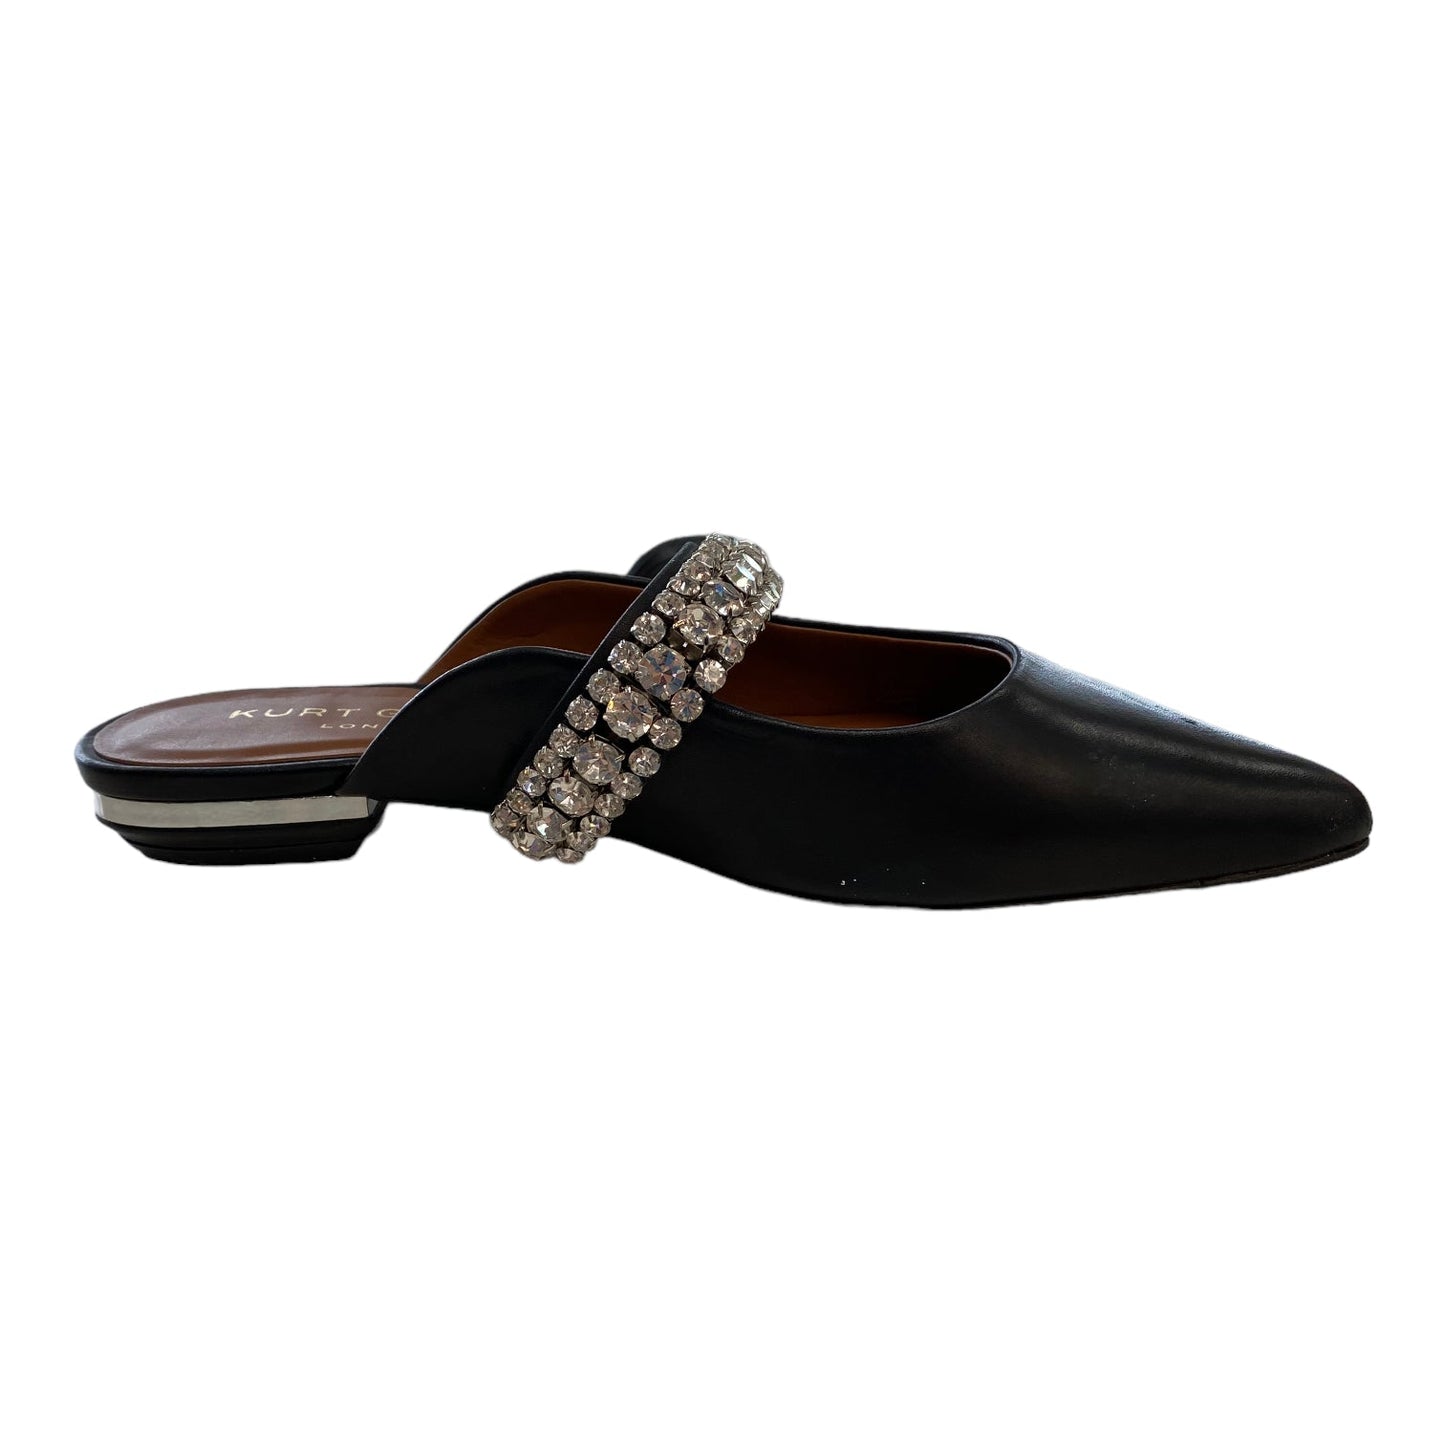 Black & Silver Shoes Flats Kurt Geiger London, Size 5.5